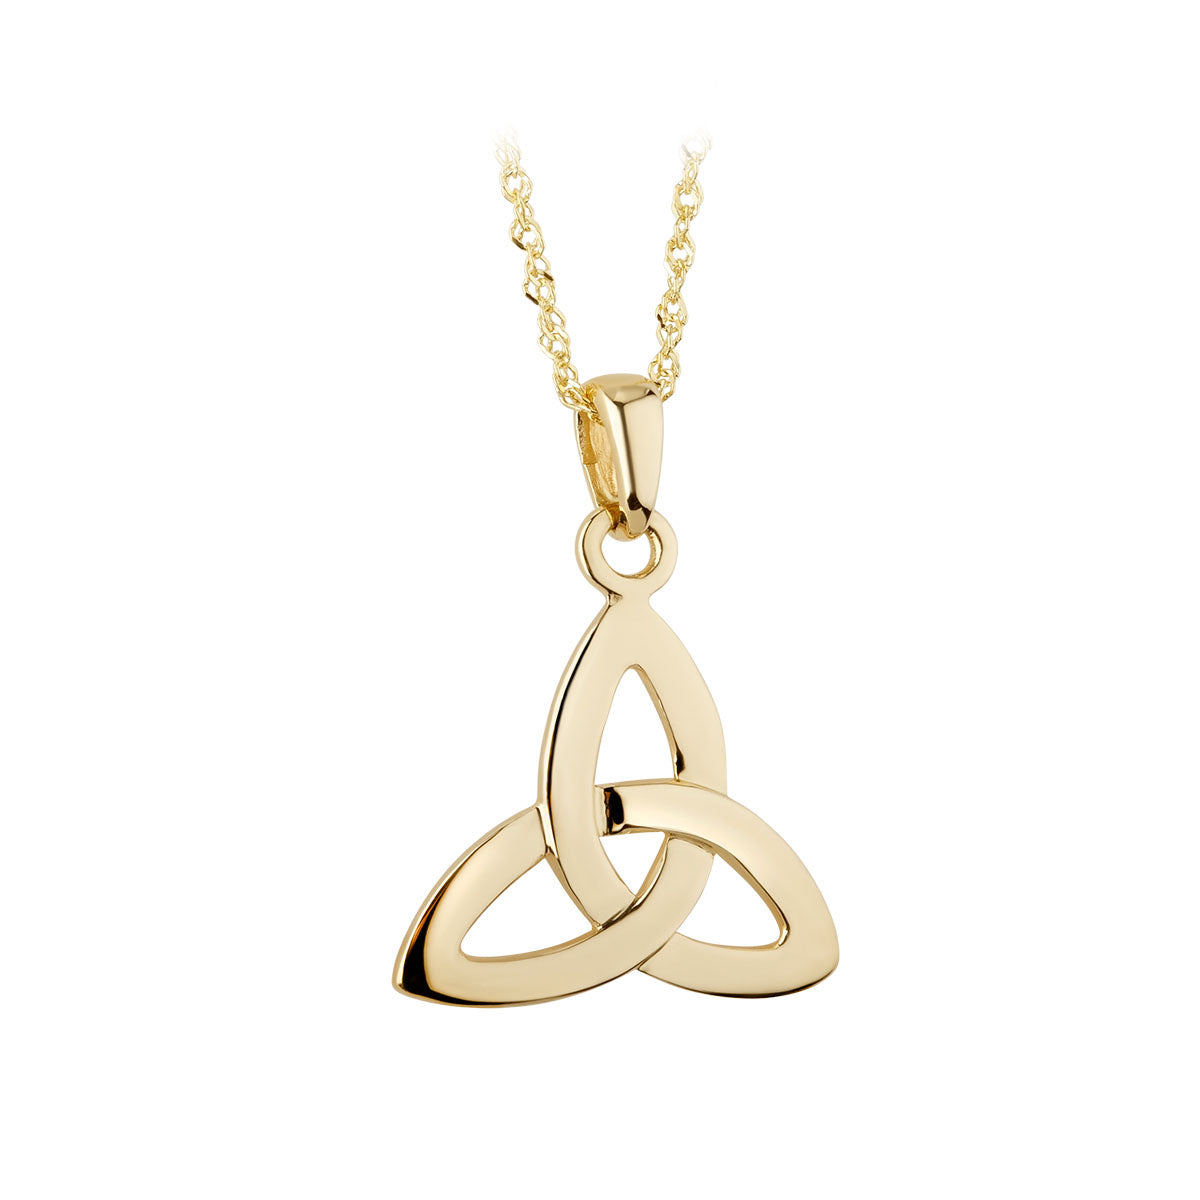 14k gold trinity knot pendant s4215 from Solvar